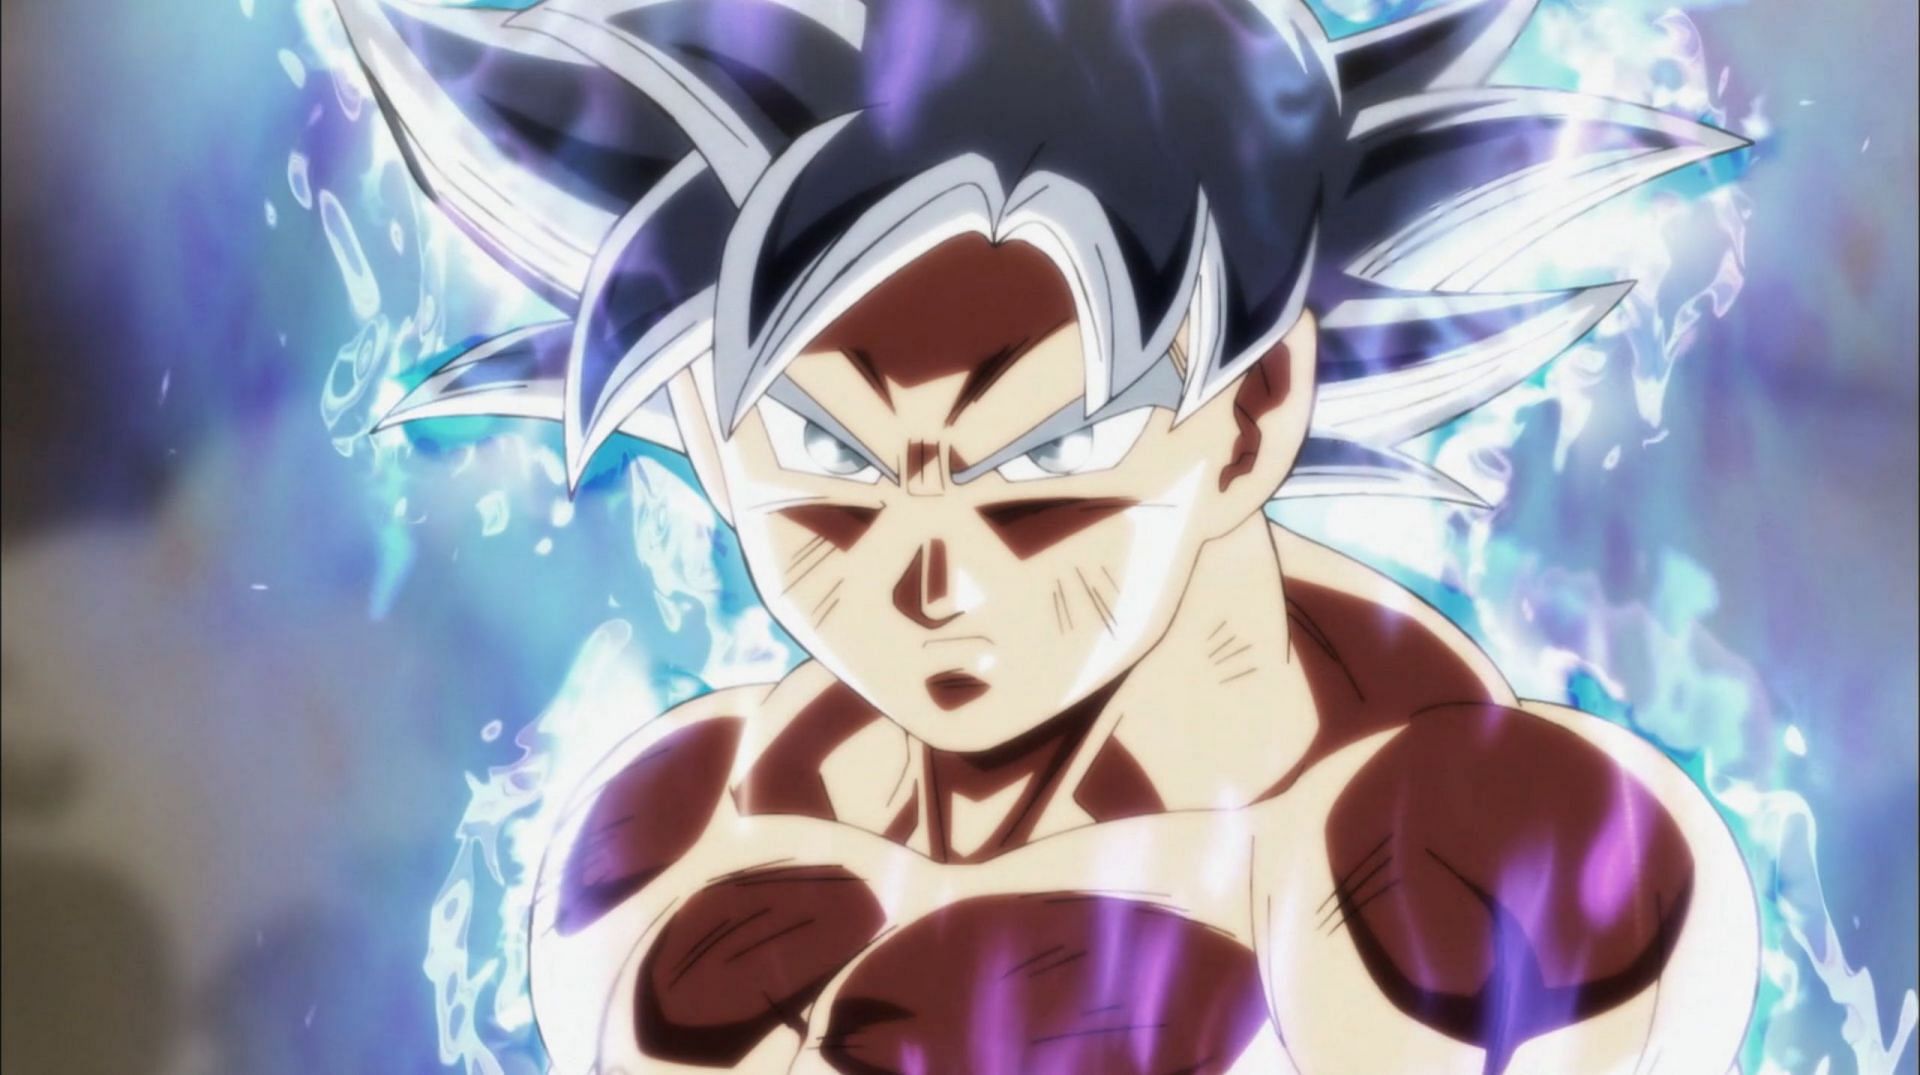 Goku using Ultra Instinct in Dragon Ball Super (Image via Toei Animation)